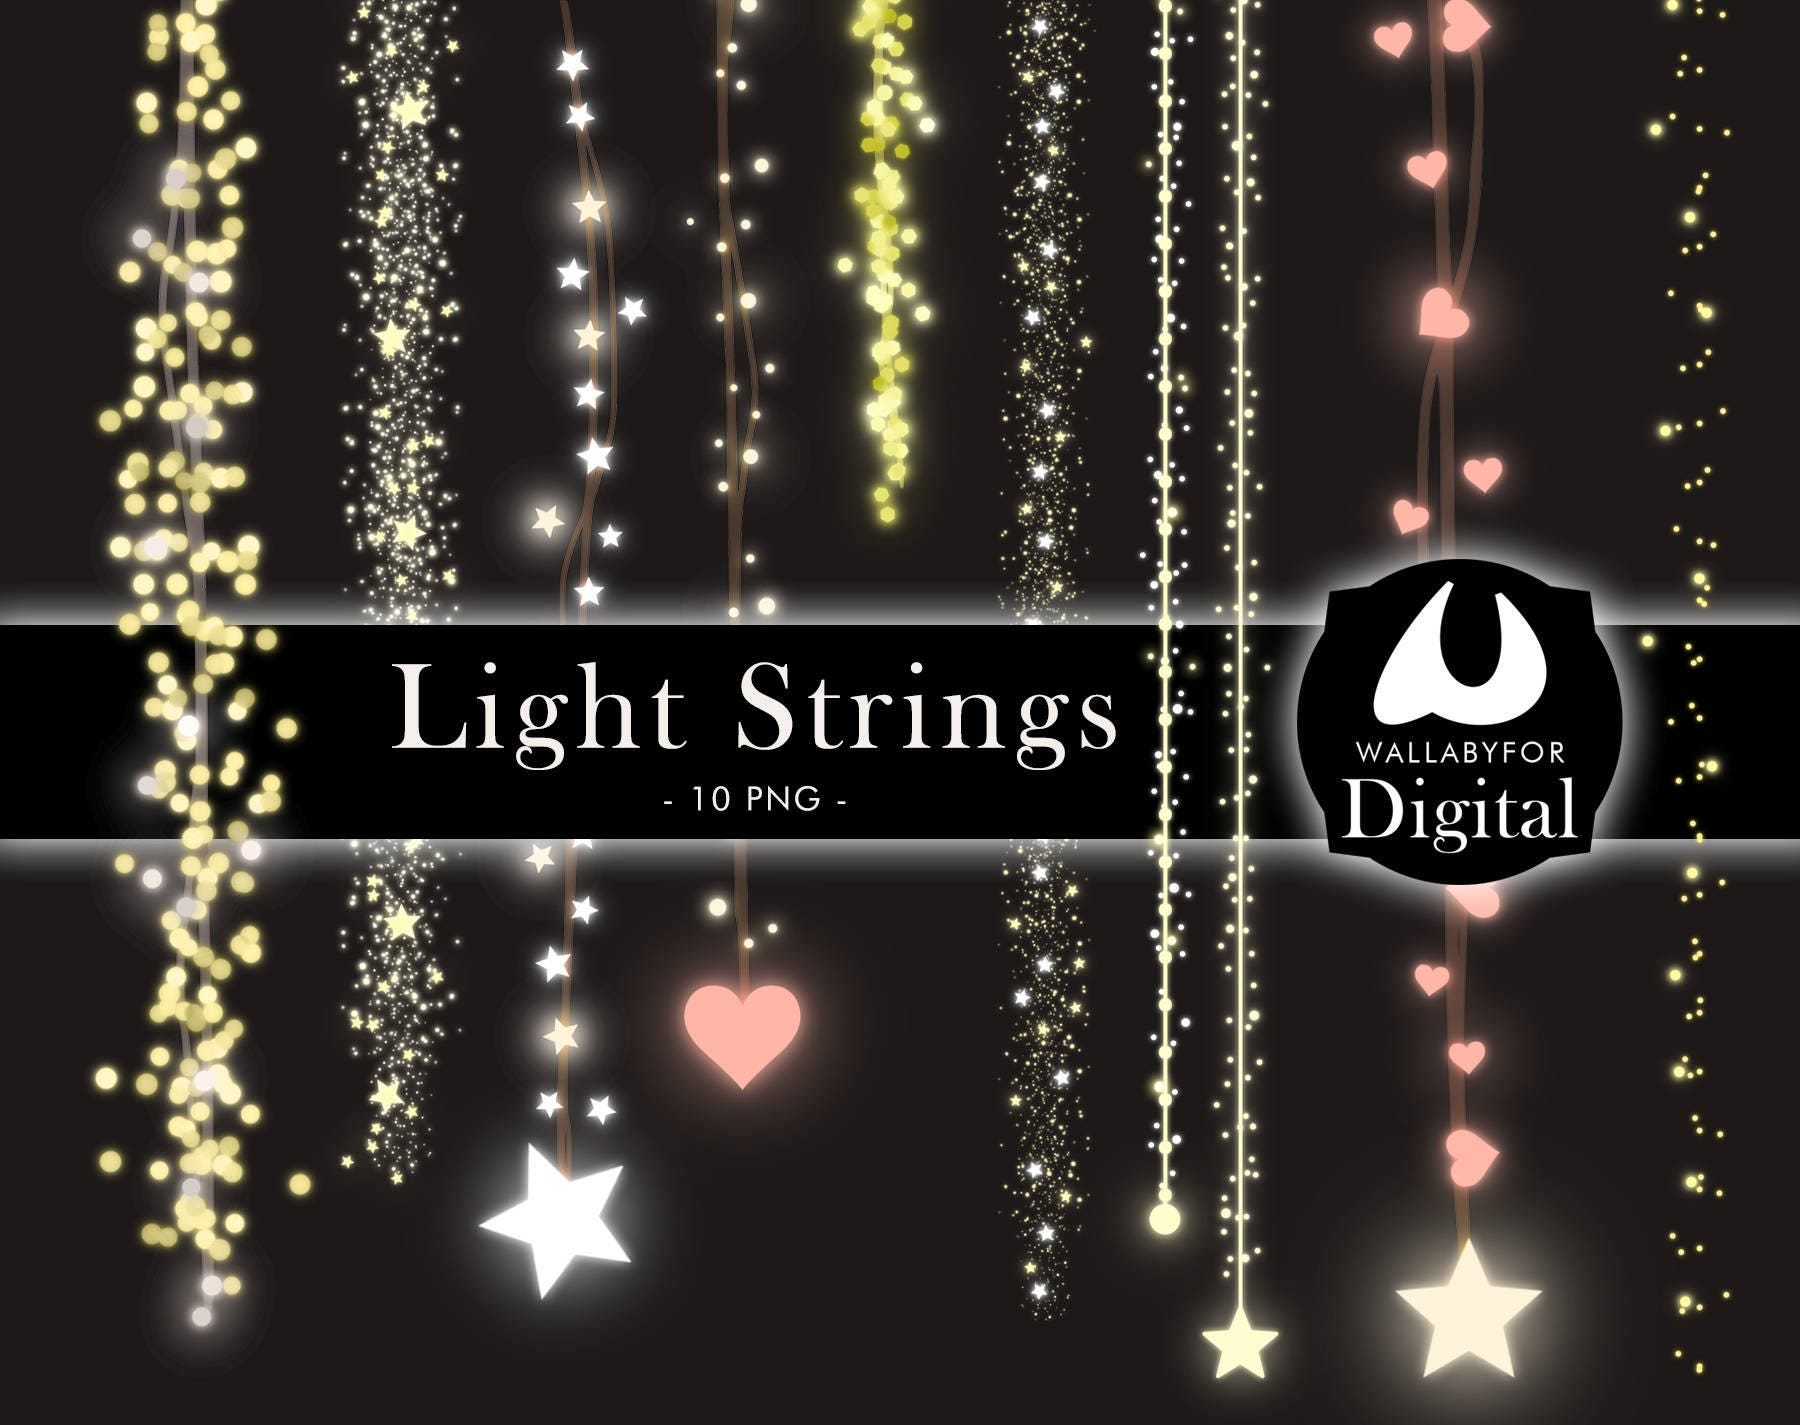 Light strings clipart Lights clipart String clipart Wedding lights Strings Wedding clipart Christmas clipart Fairy string Valentine